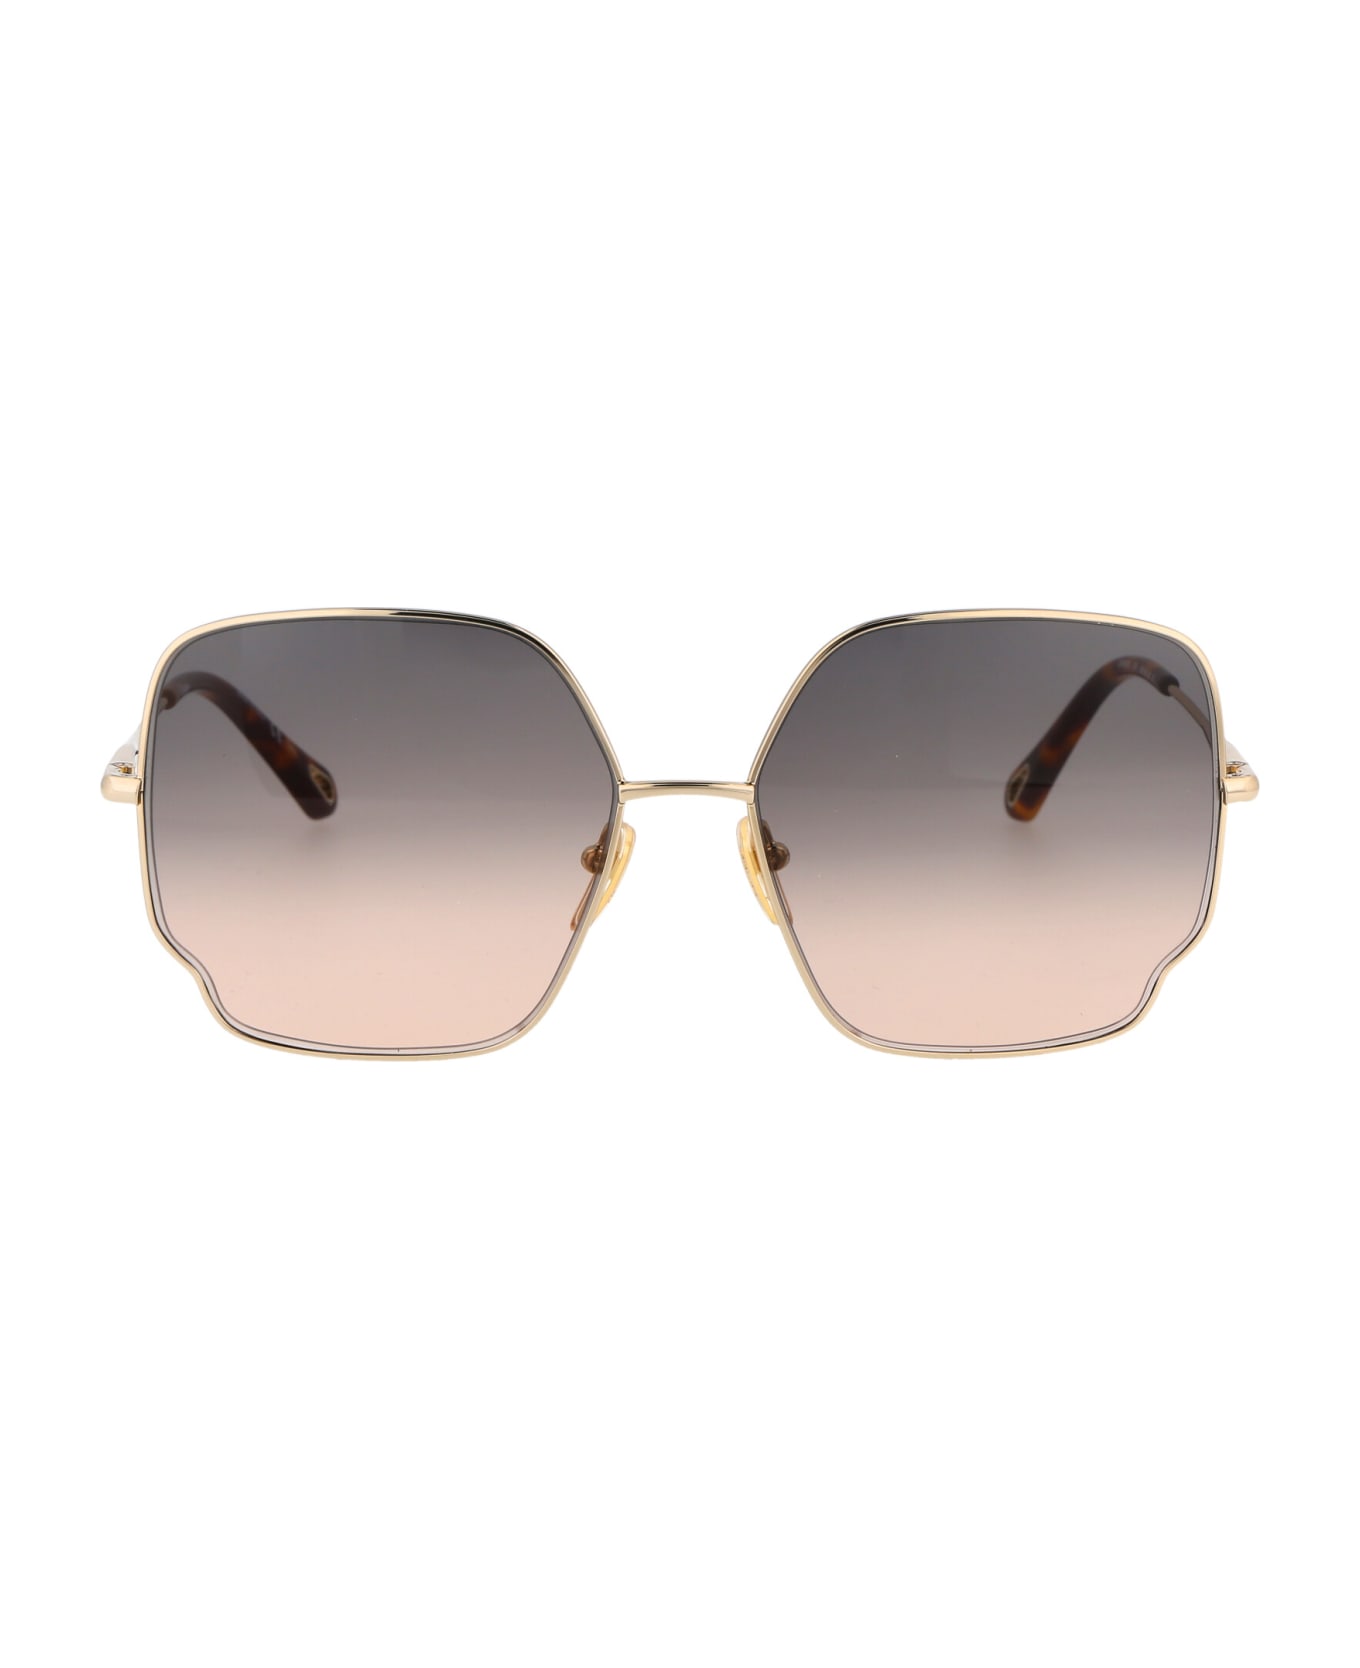 Chloé Eyewear Ch0092s Sunglasses - 001 GOLD GOLD BROWN サングラス